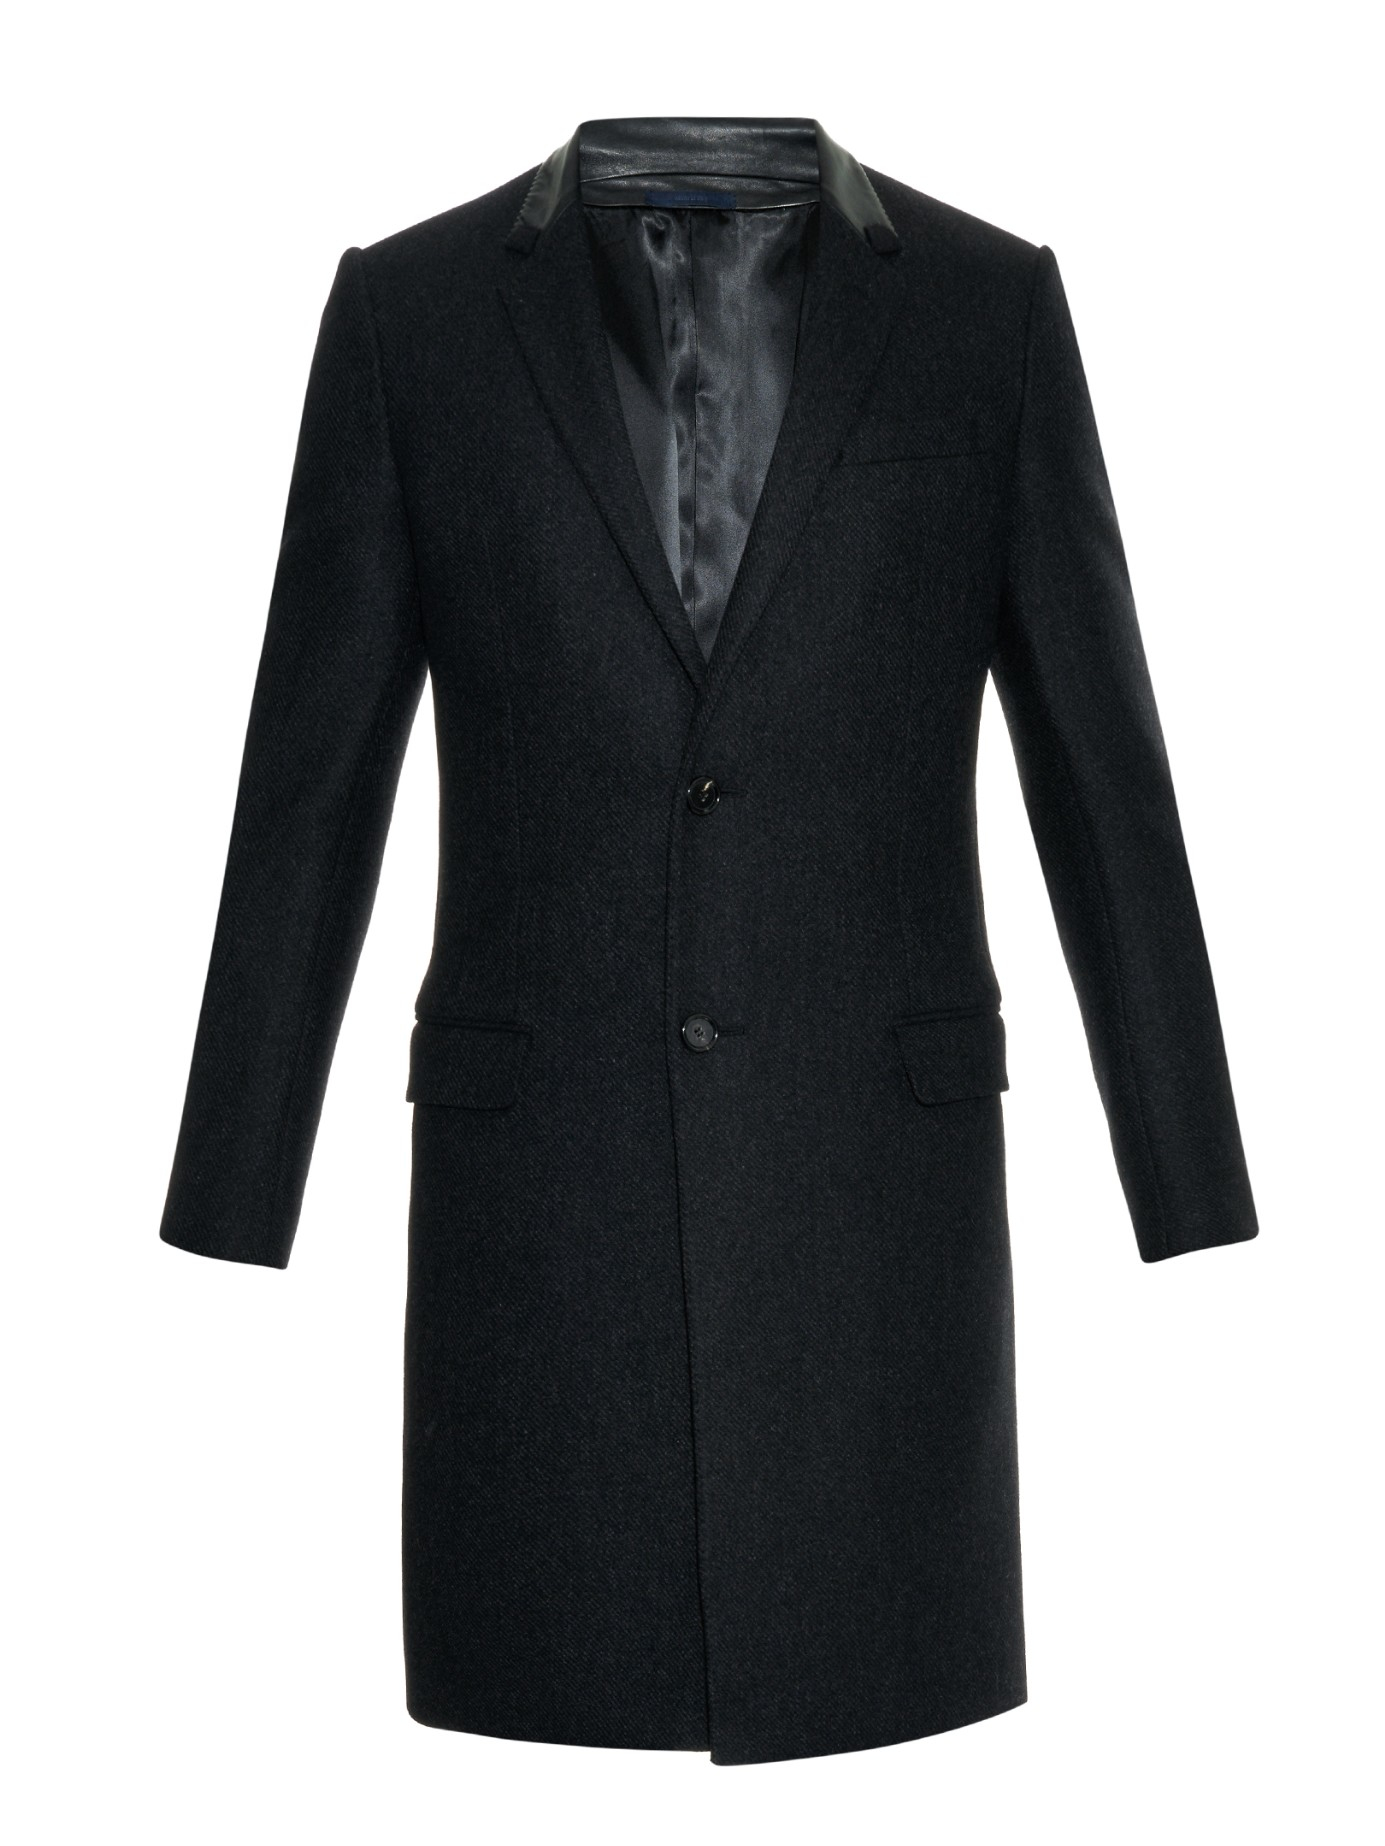 Lyst - Lanvin Leather-collar Wool Overcoat in Black for Men